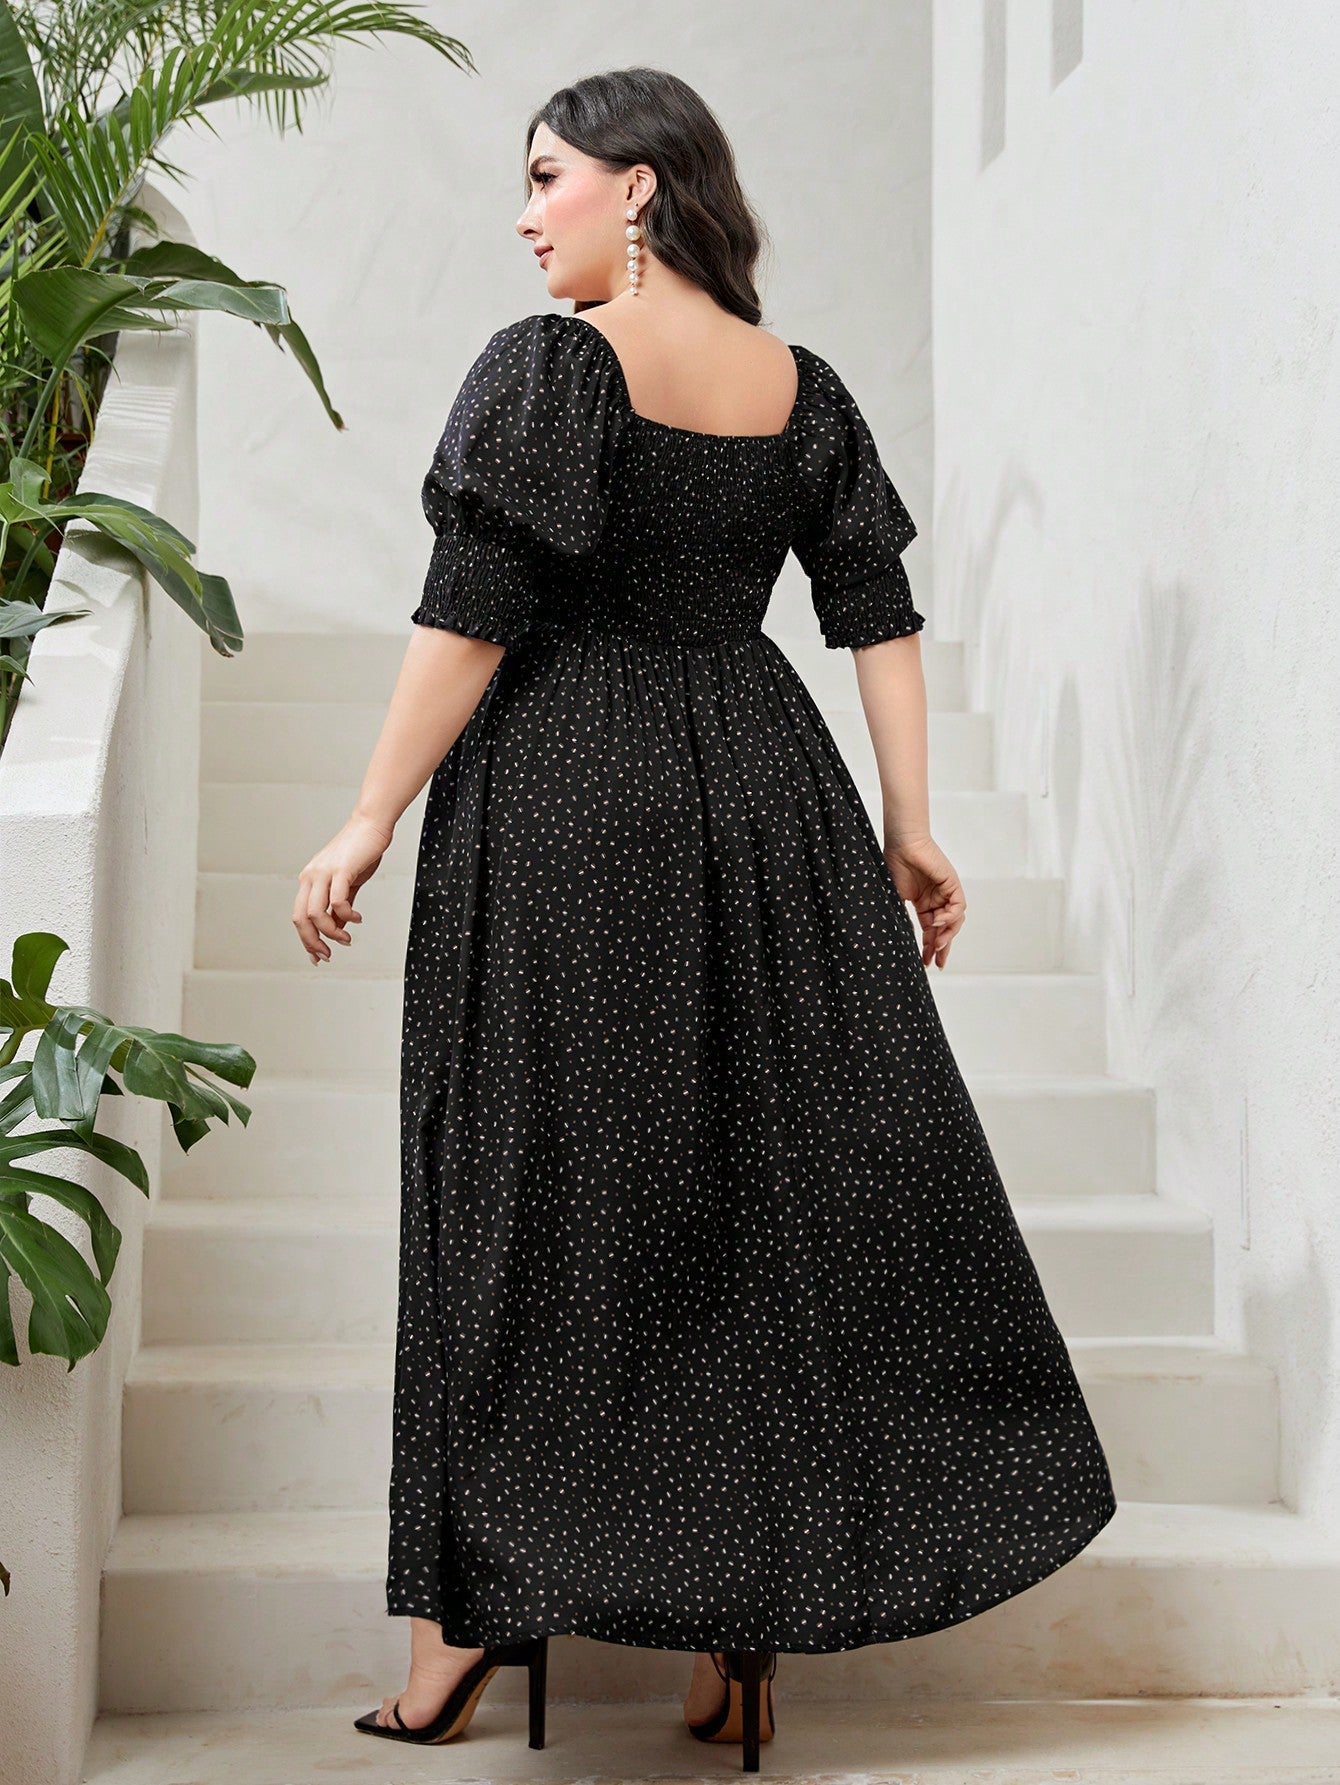 SHEIN, Dresses, Shein Curve Size 4xl Blackwhite Polka Dot Geo Print Dress